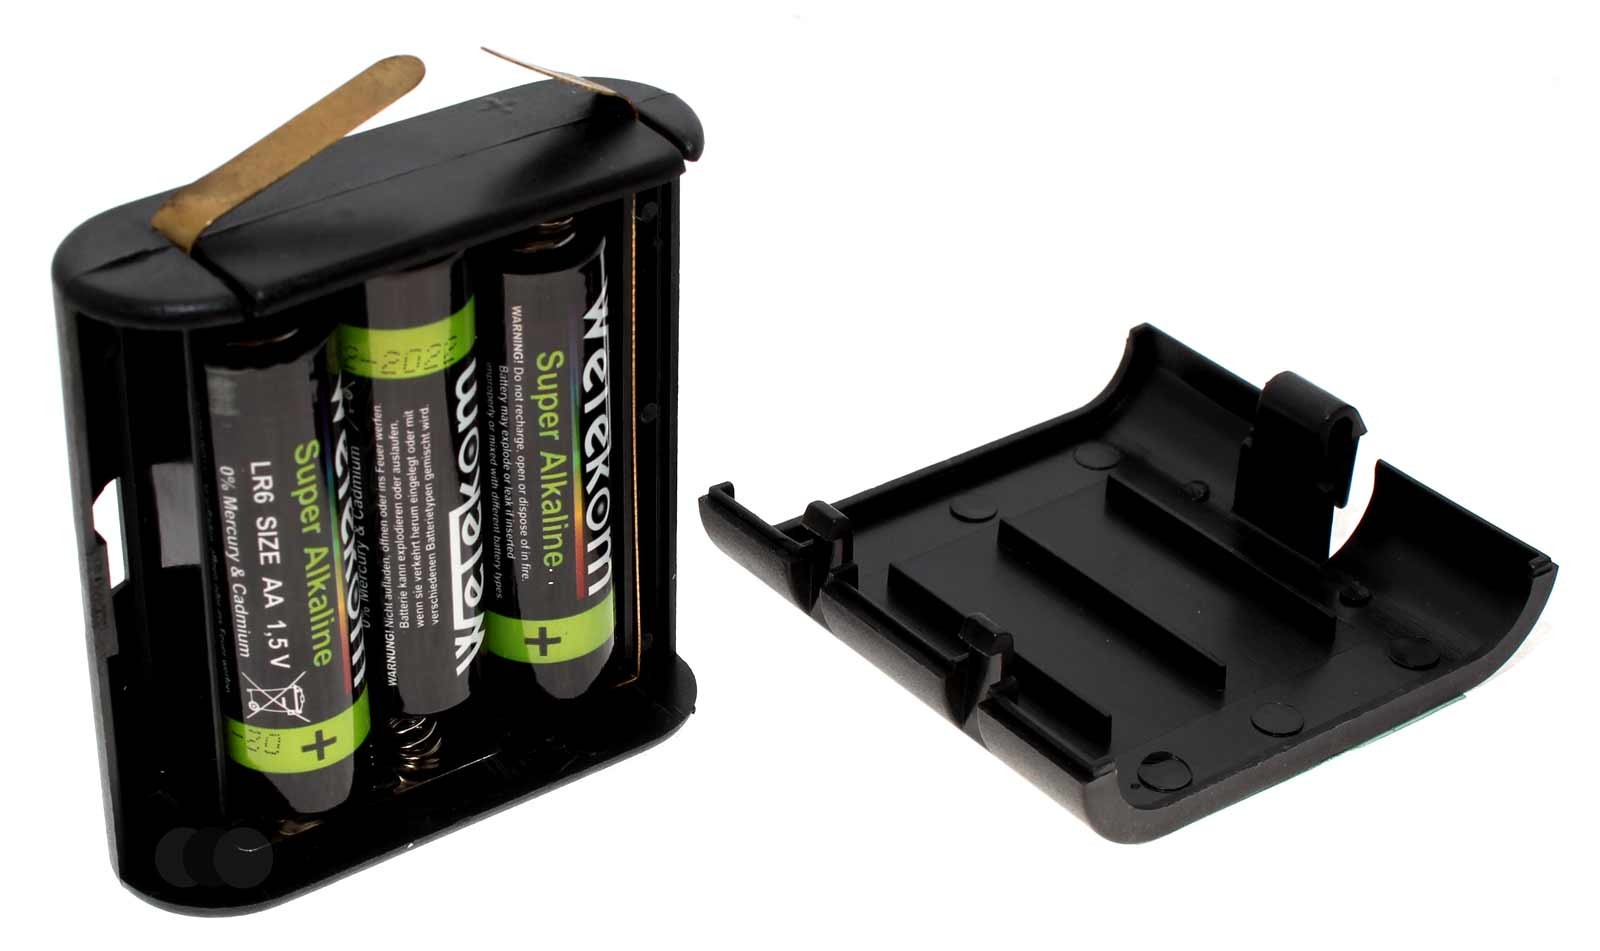 Batterie Box für Batterien bis zu 80Ah, 340x230x250mm 